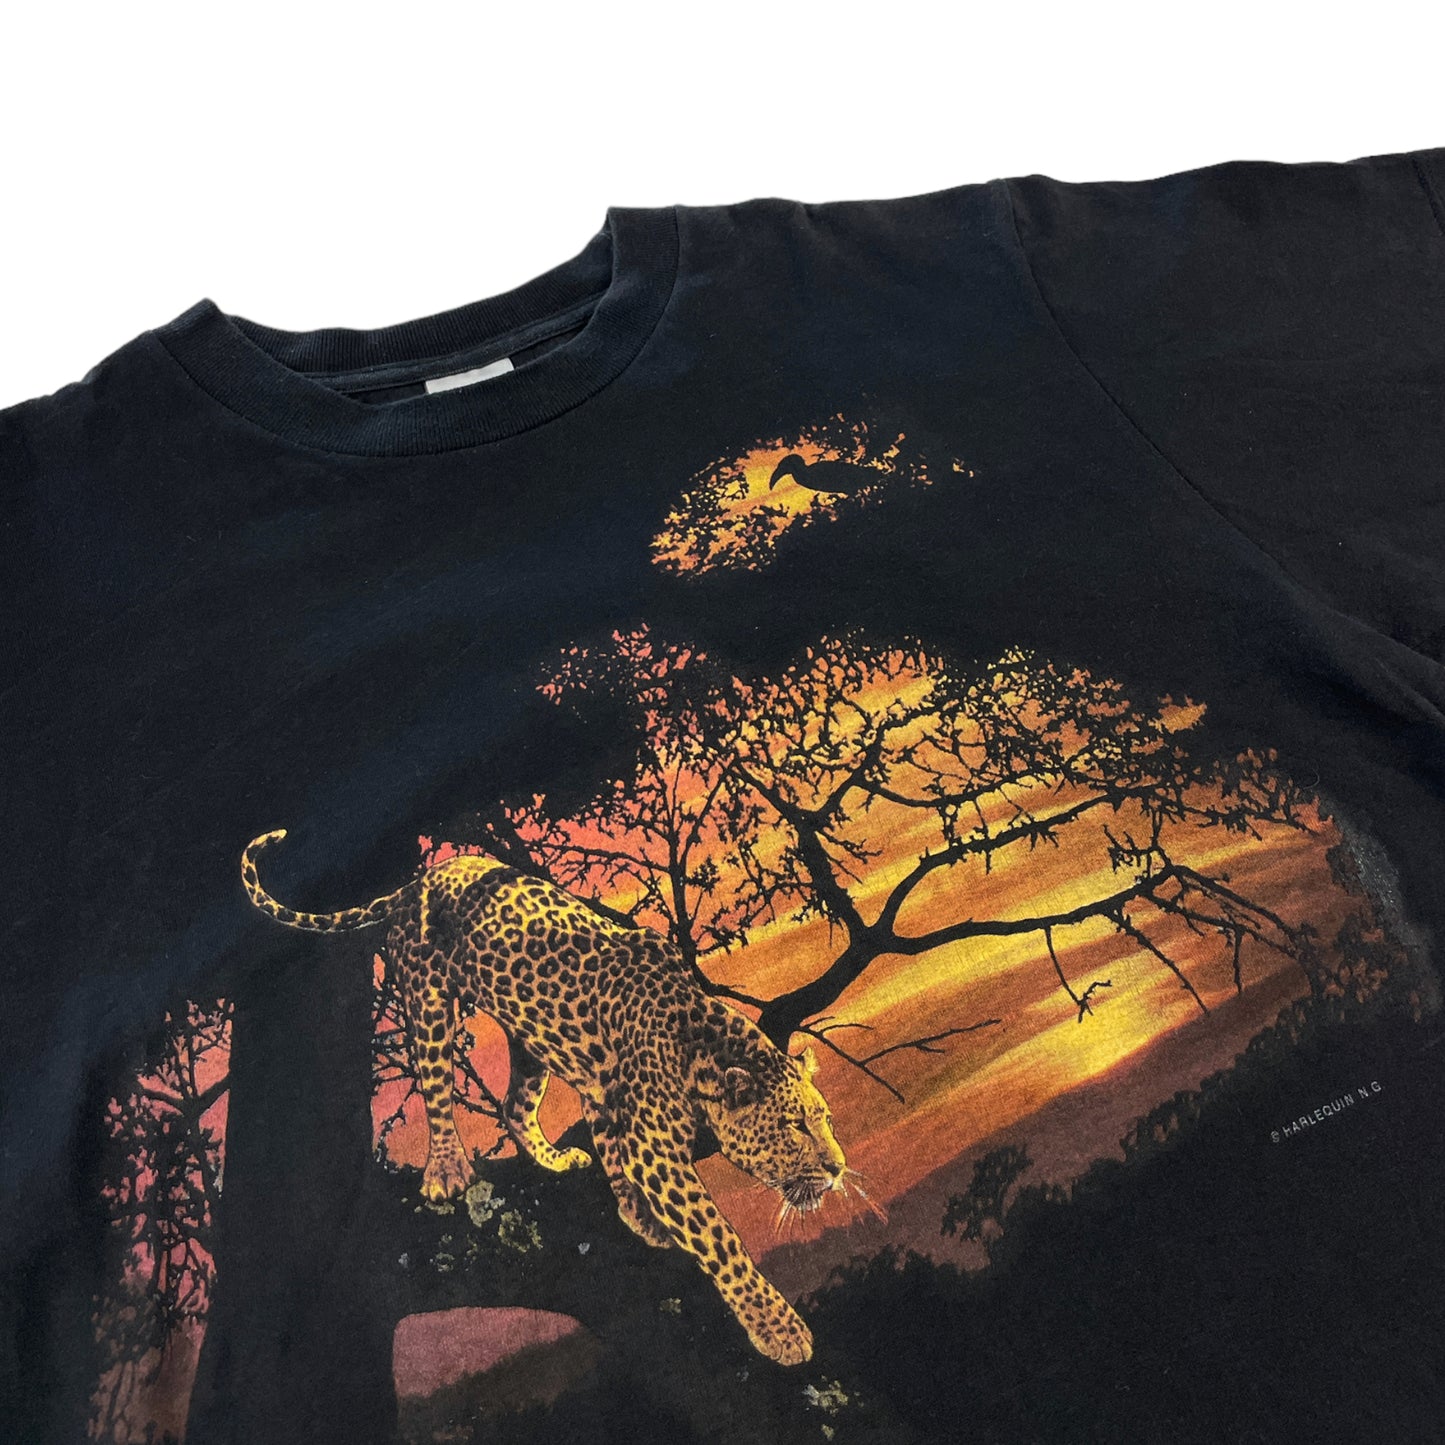 Jungle T-Shirt